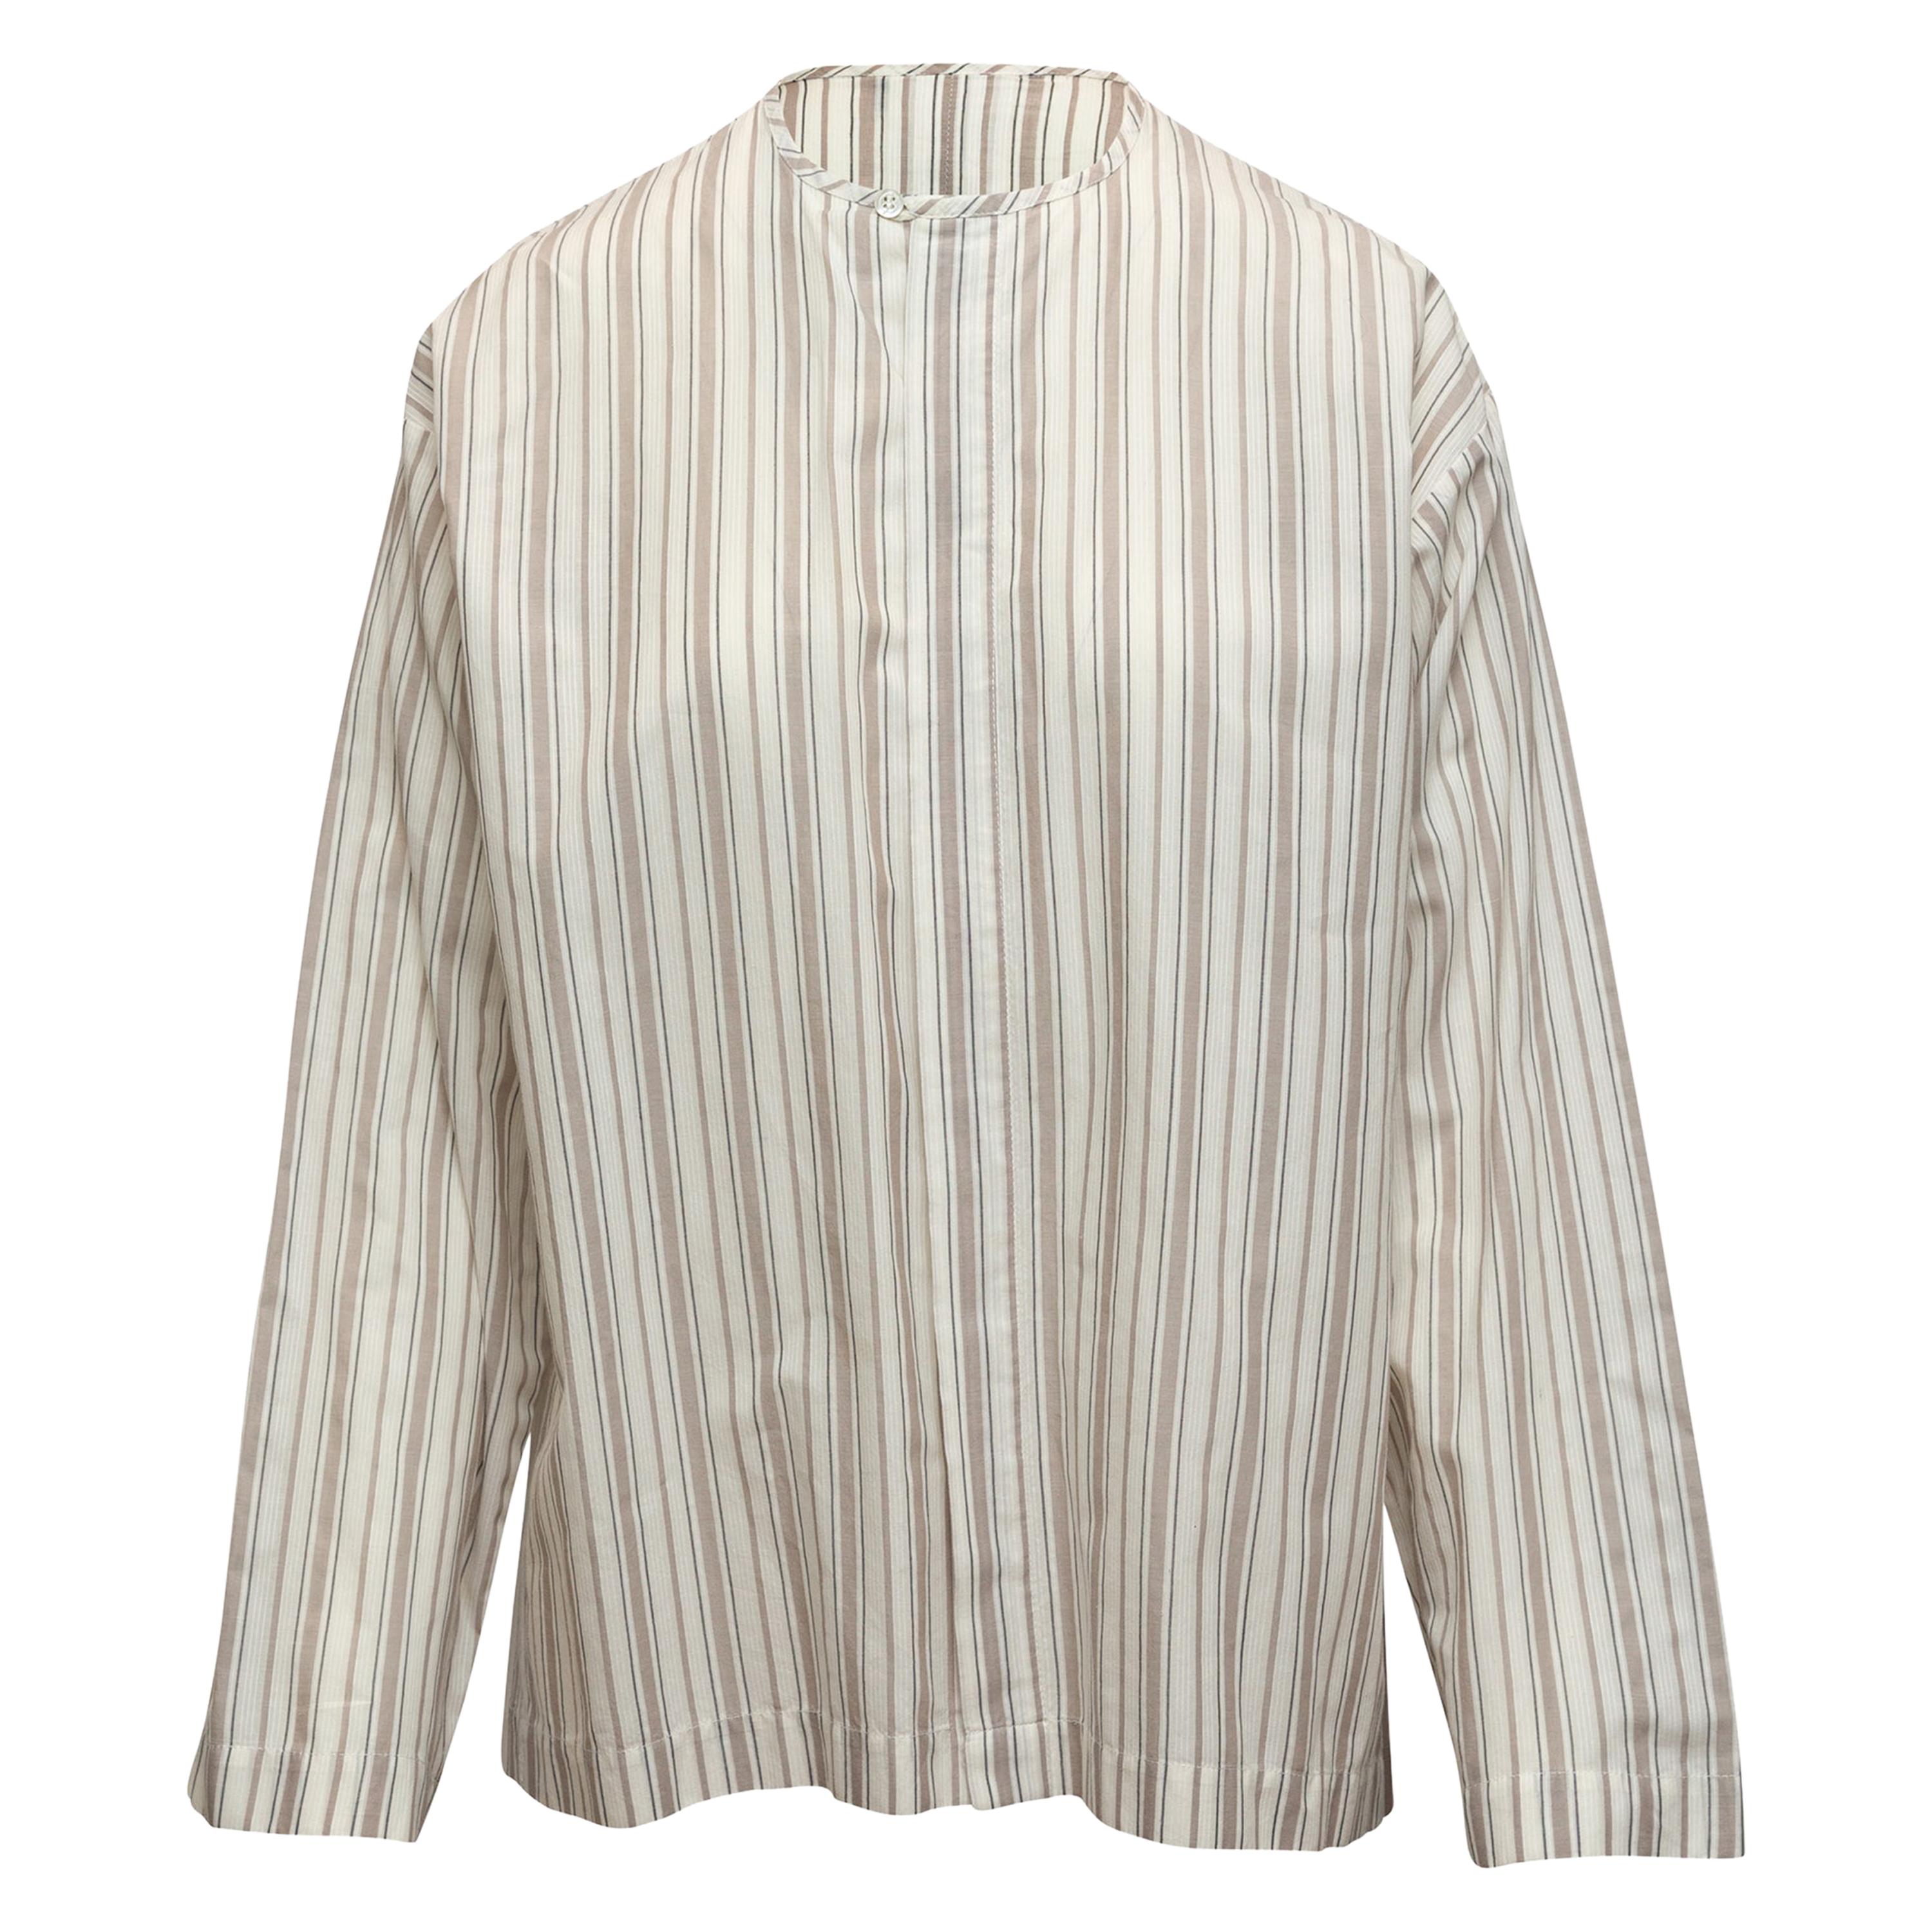 Eskandar White & Grey Striped Button-Up Top